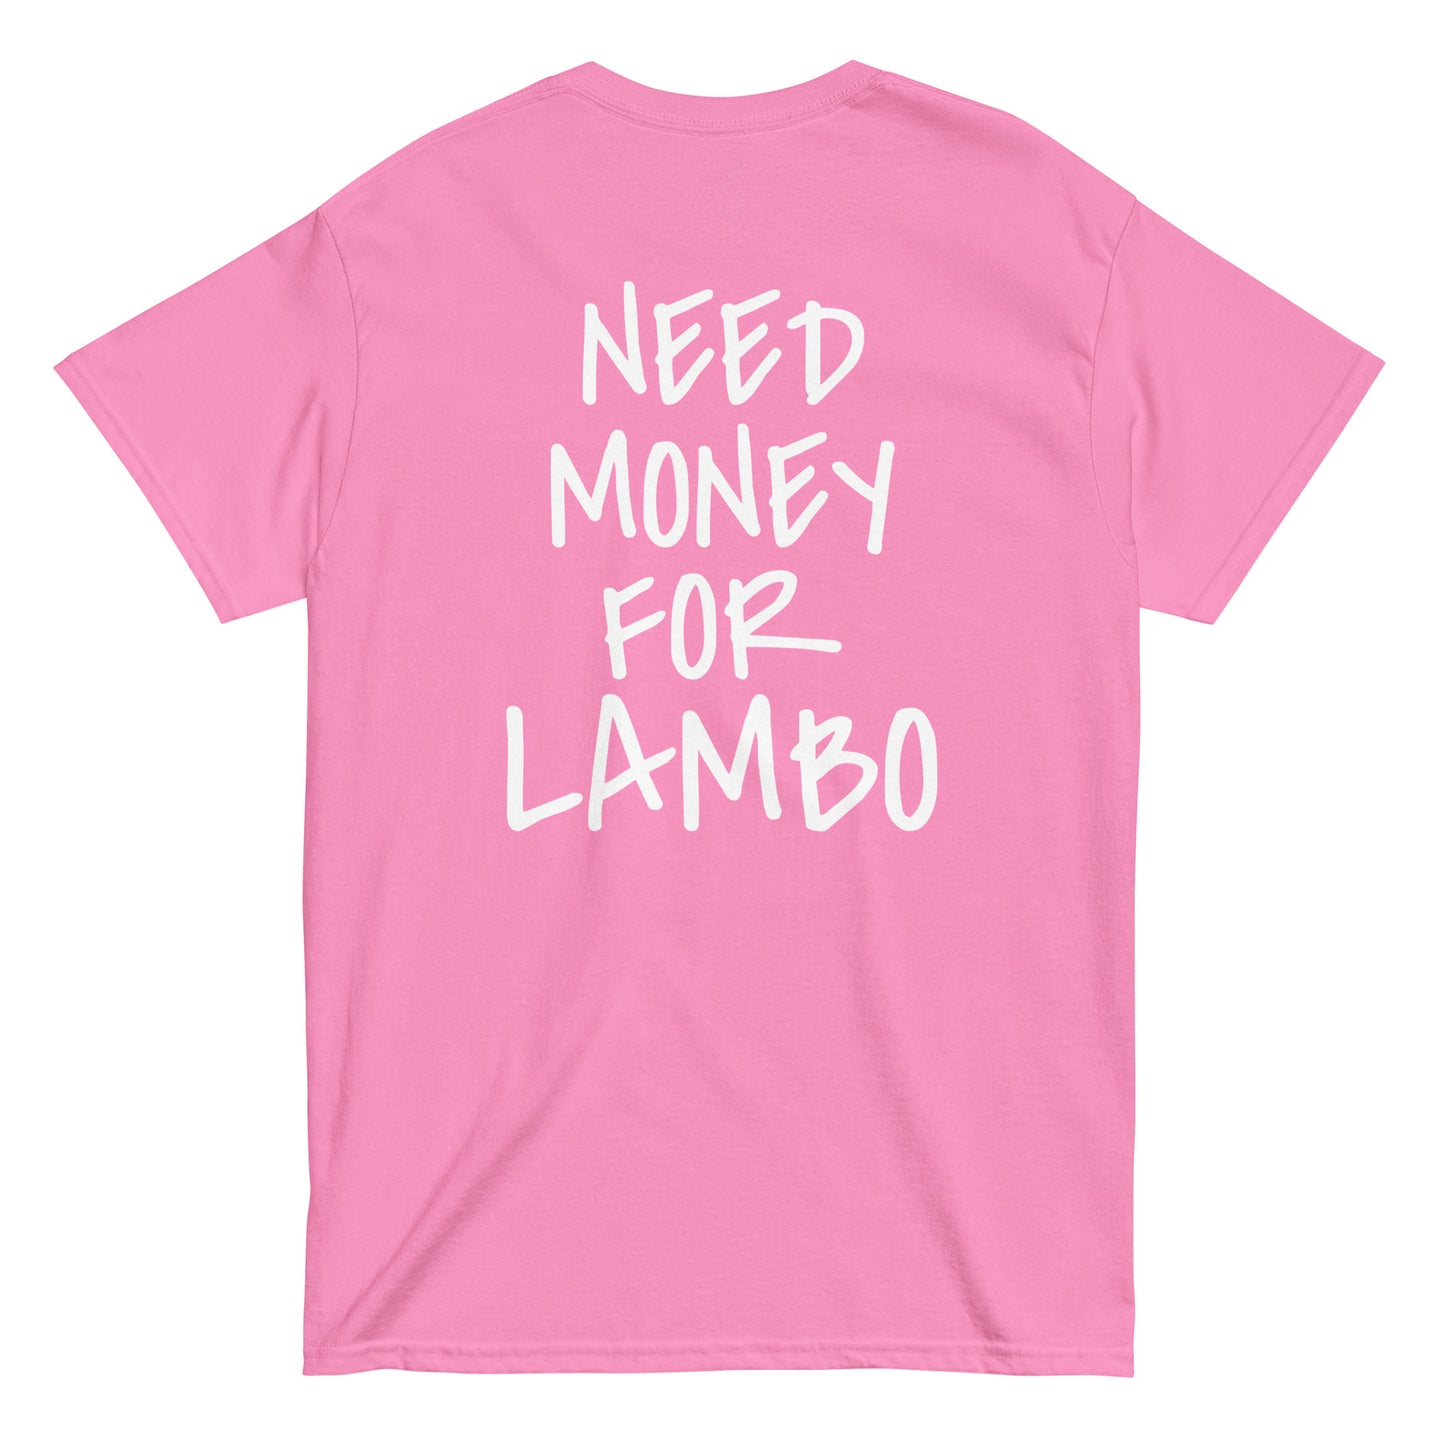 NEED MONEY FOR LAMBO T-Shirt [BACKPRINT]